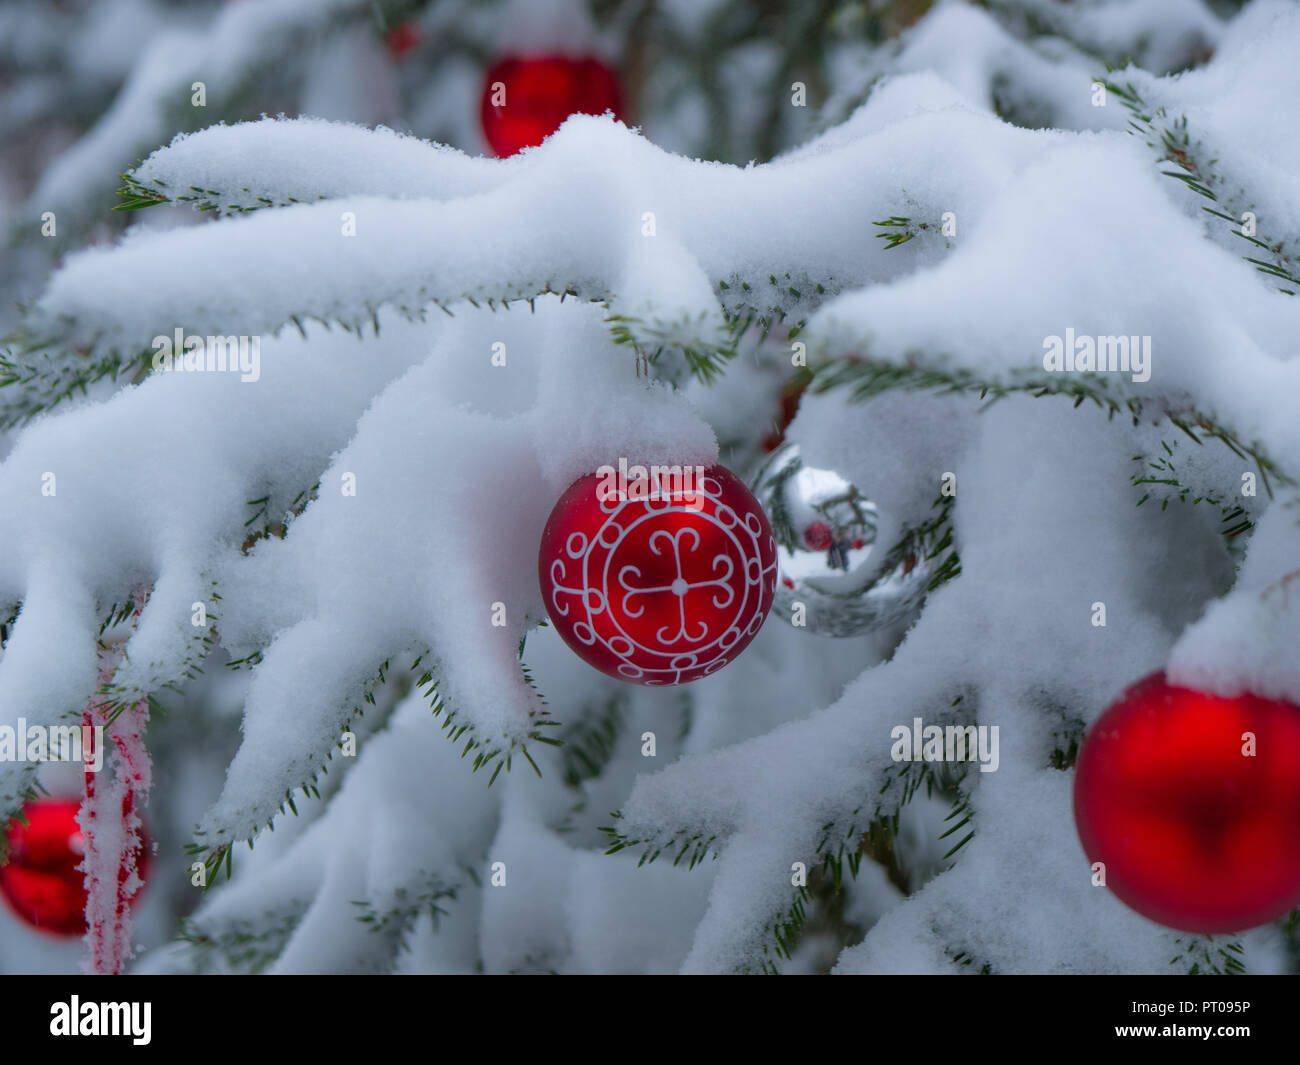 Christmas bulbs -Fotos und -Bildmaterial in hoher Auflösung – Alamy